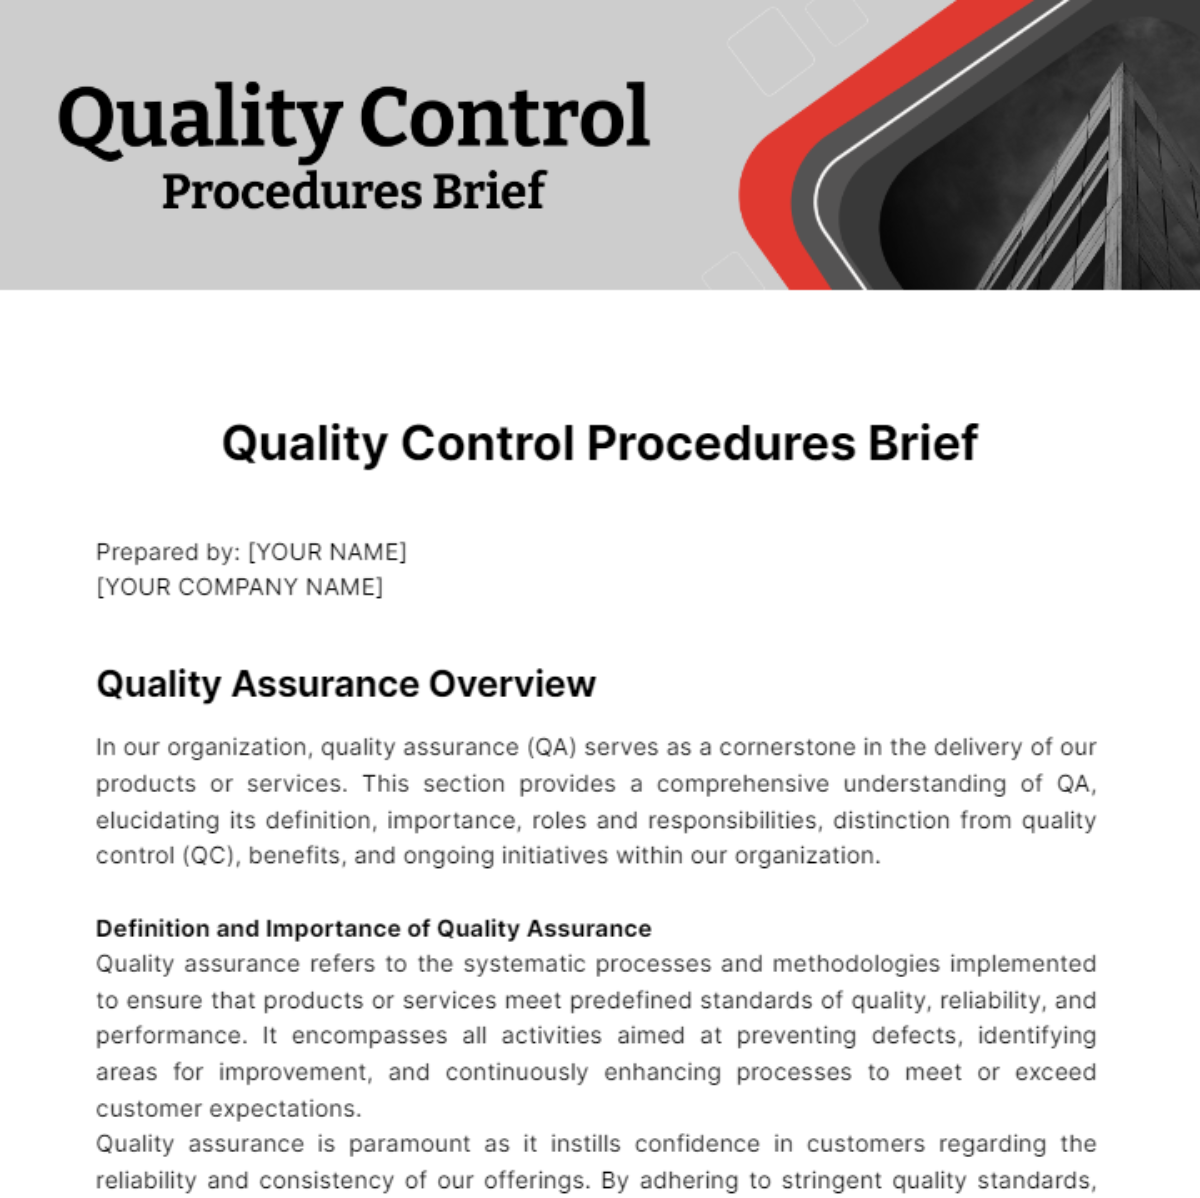 Quality Control Procedures Brief Template